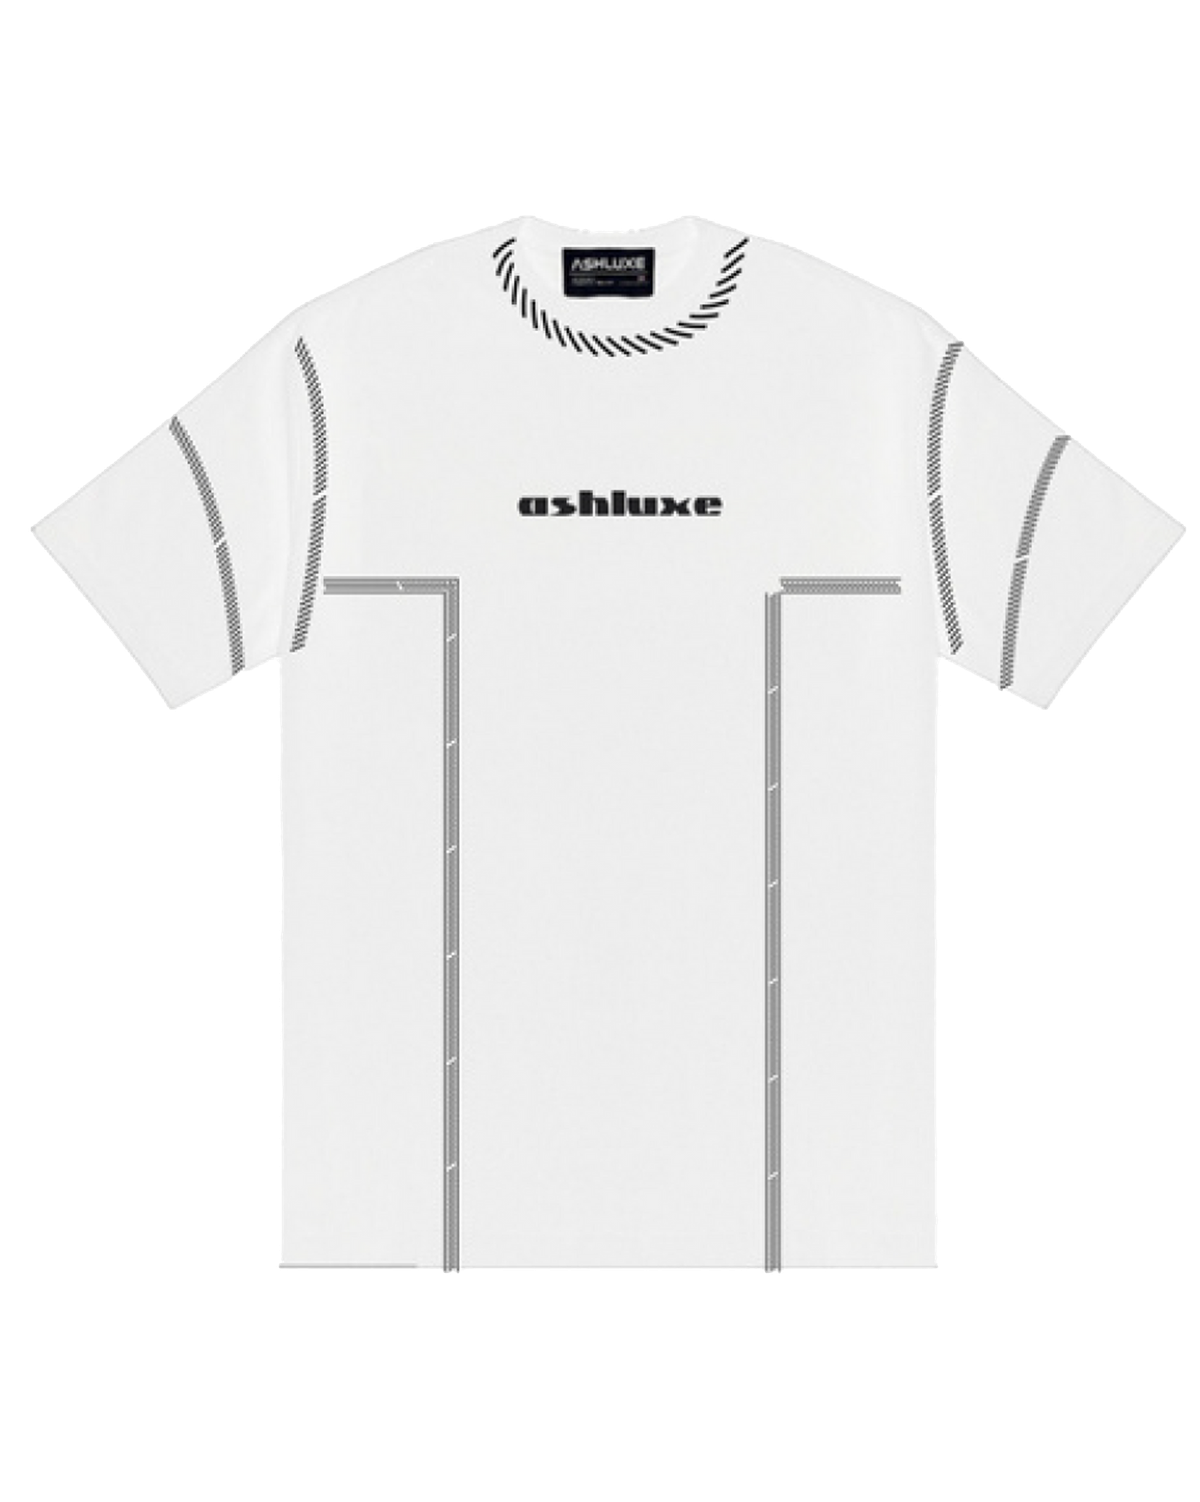 Ashluxe Double Threaded T-shirt - White